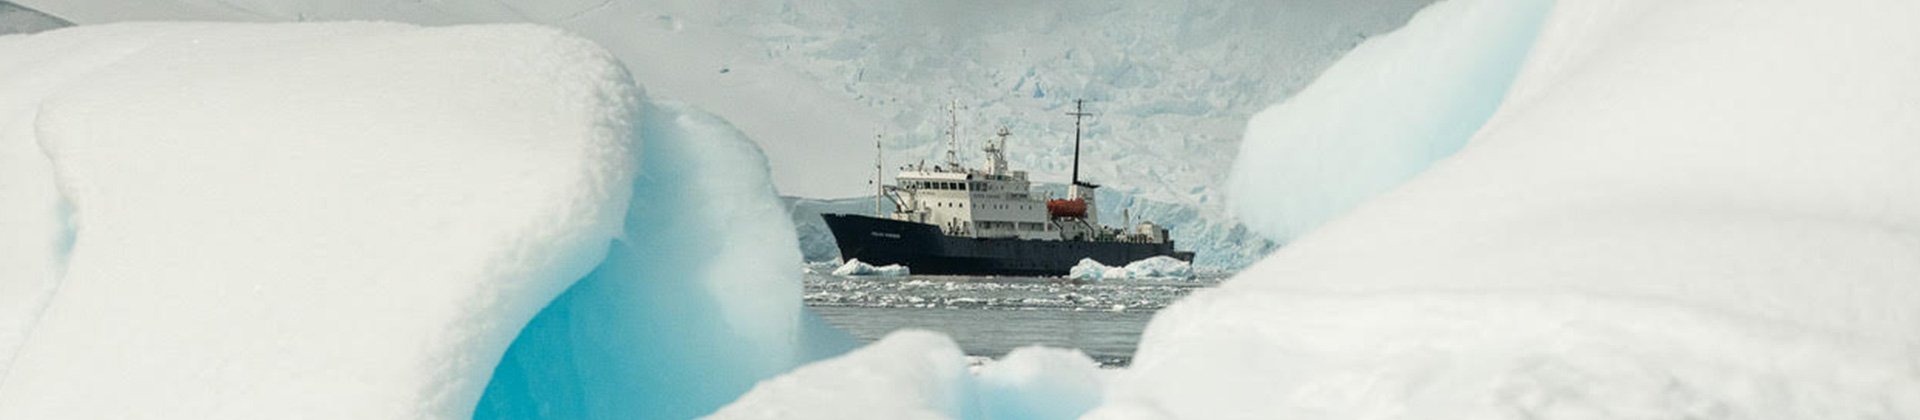 MV Polar Pioneer